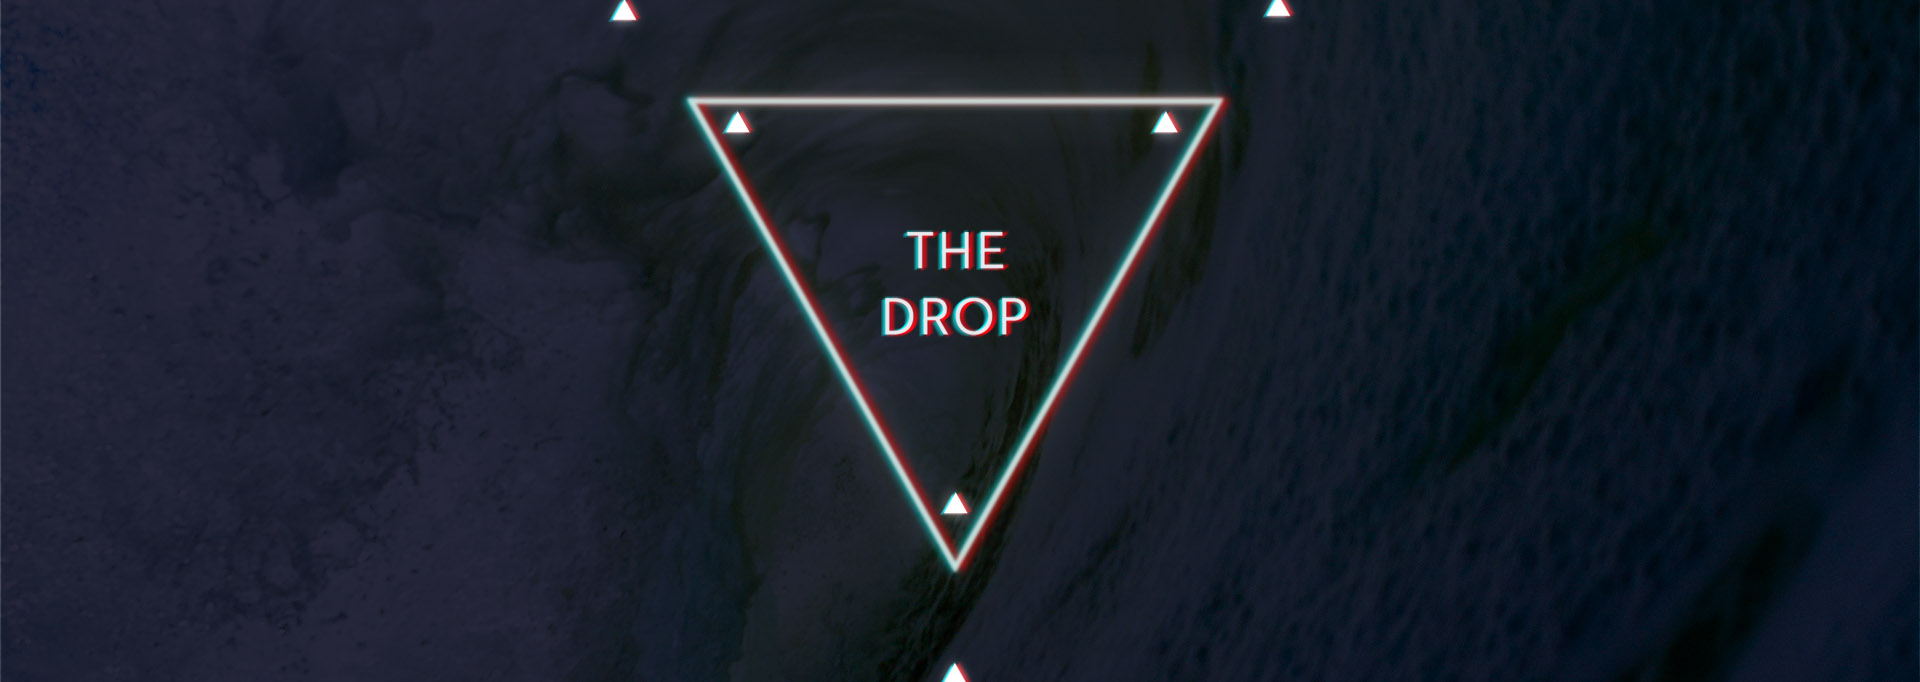 The Drop - Greg Enloe Image